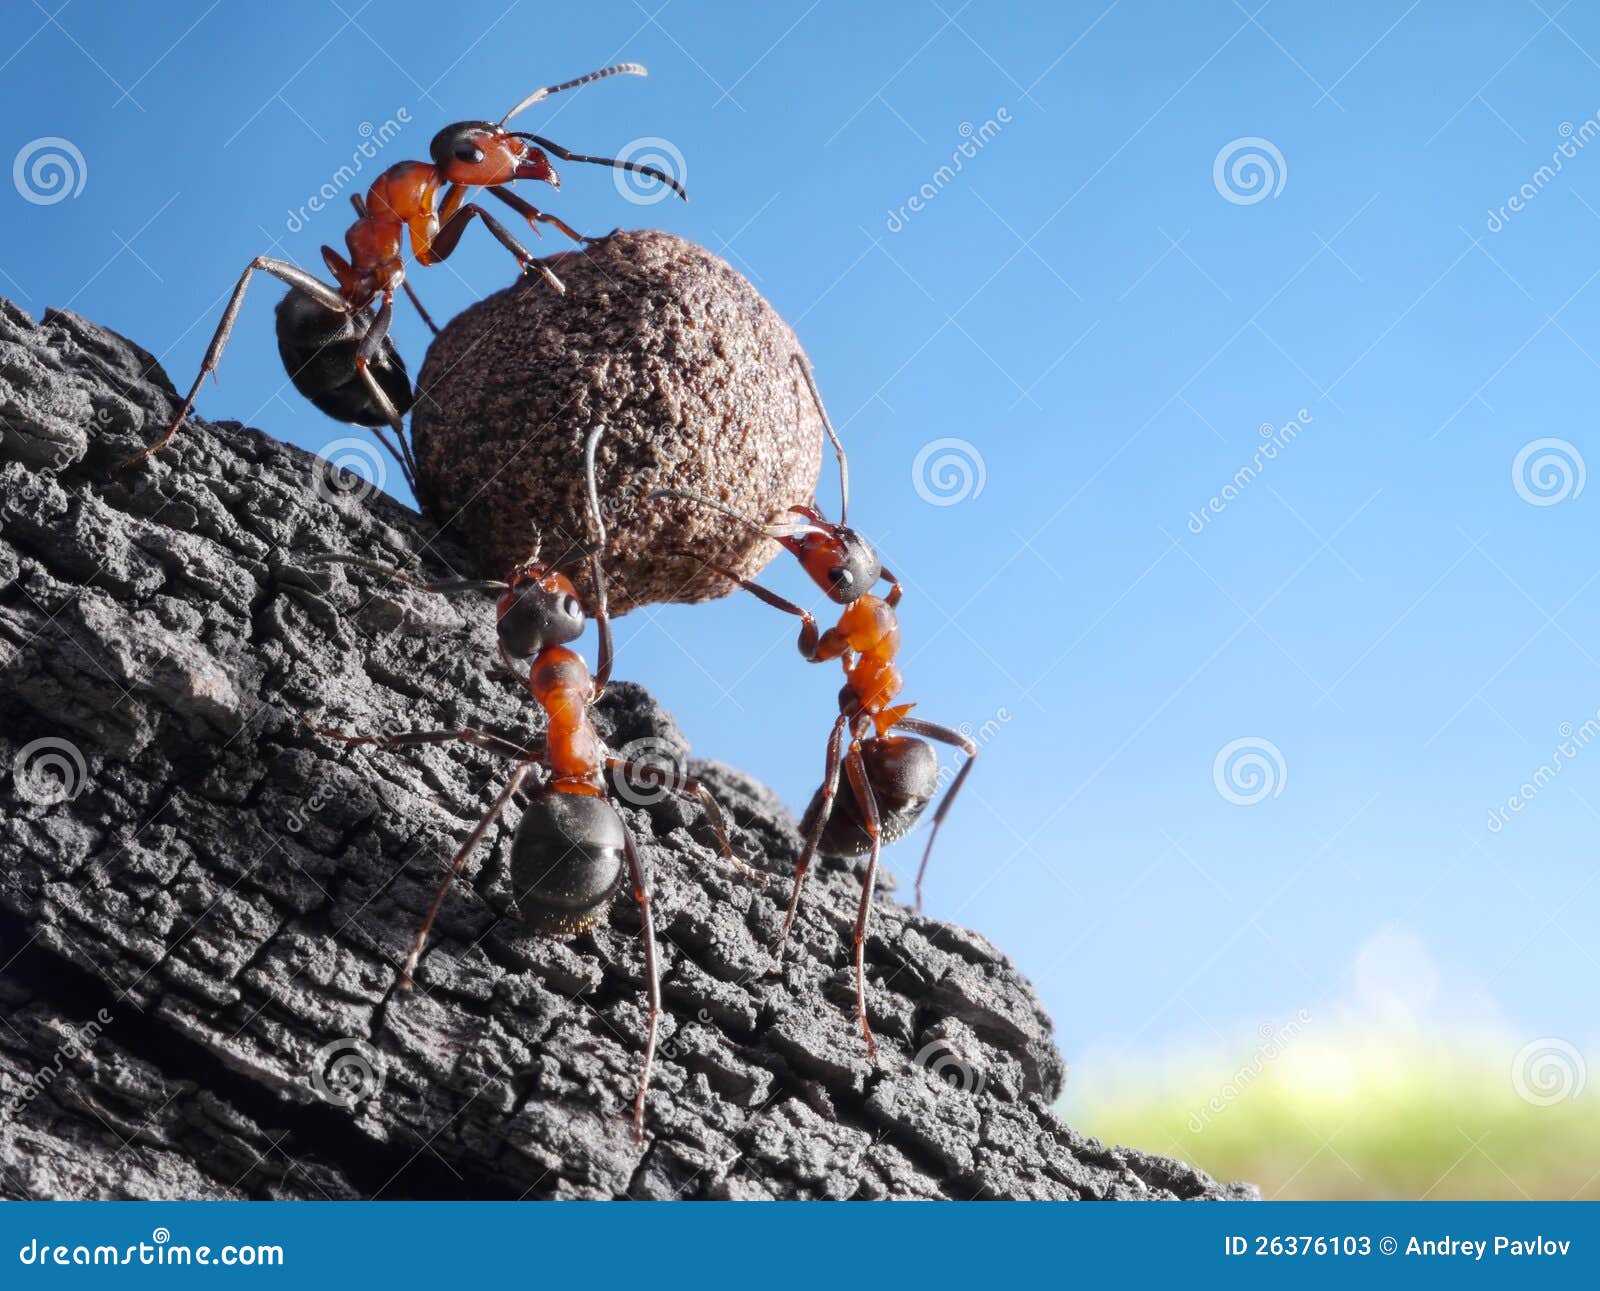 team of ants rolls stone uphill, teamwork